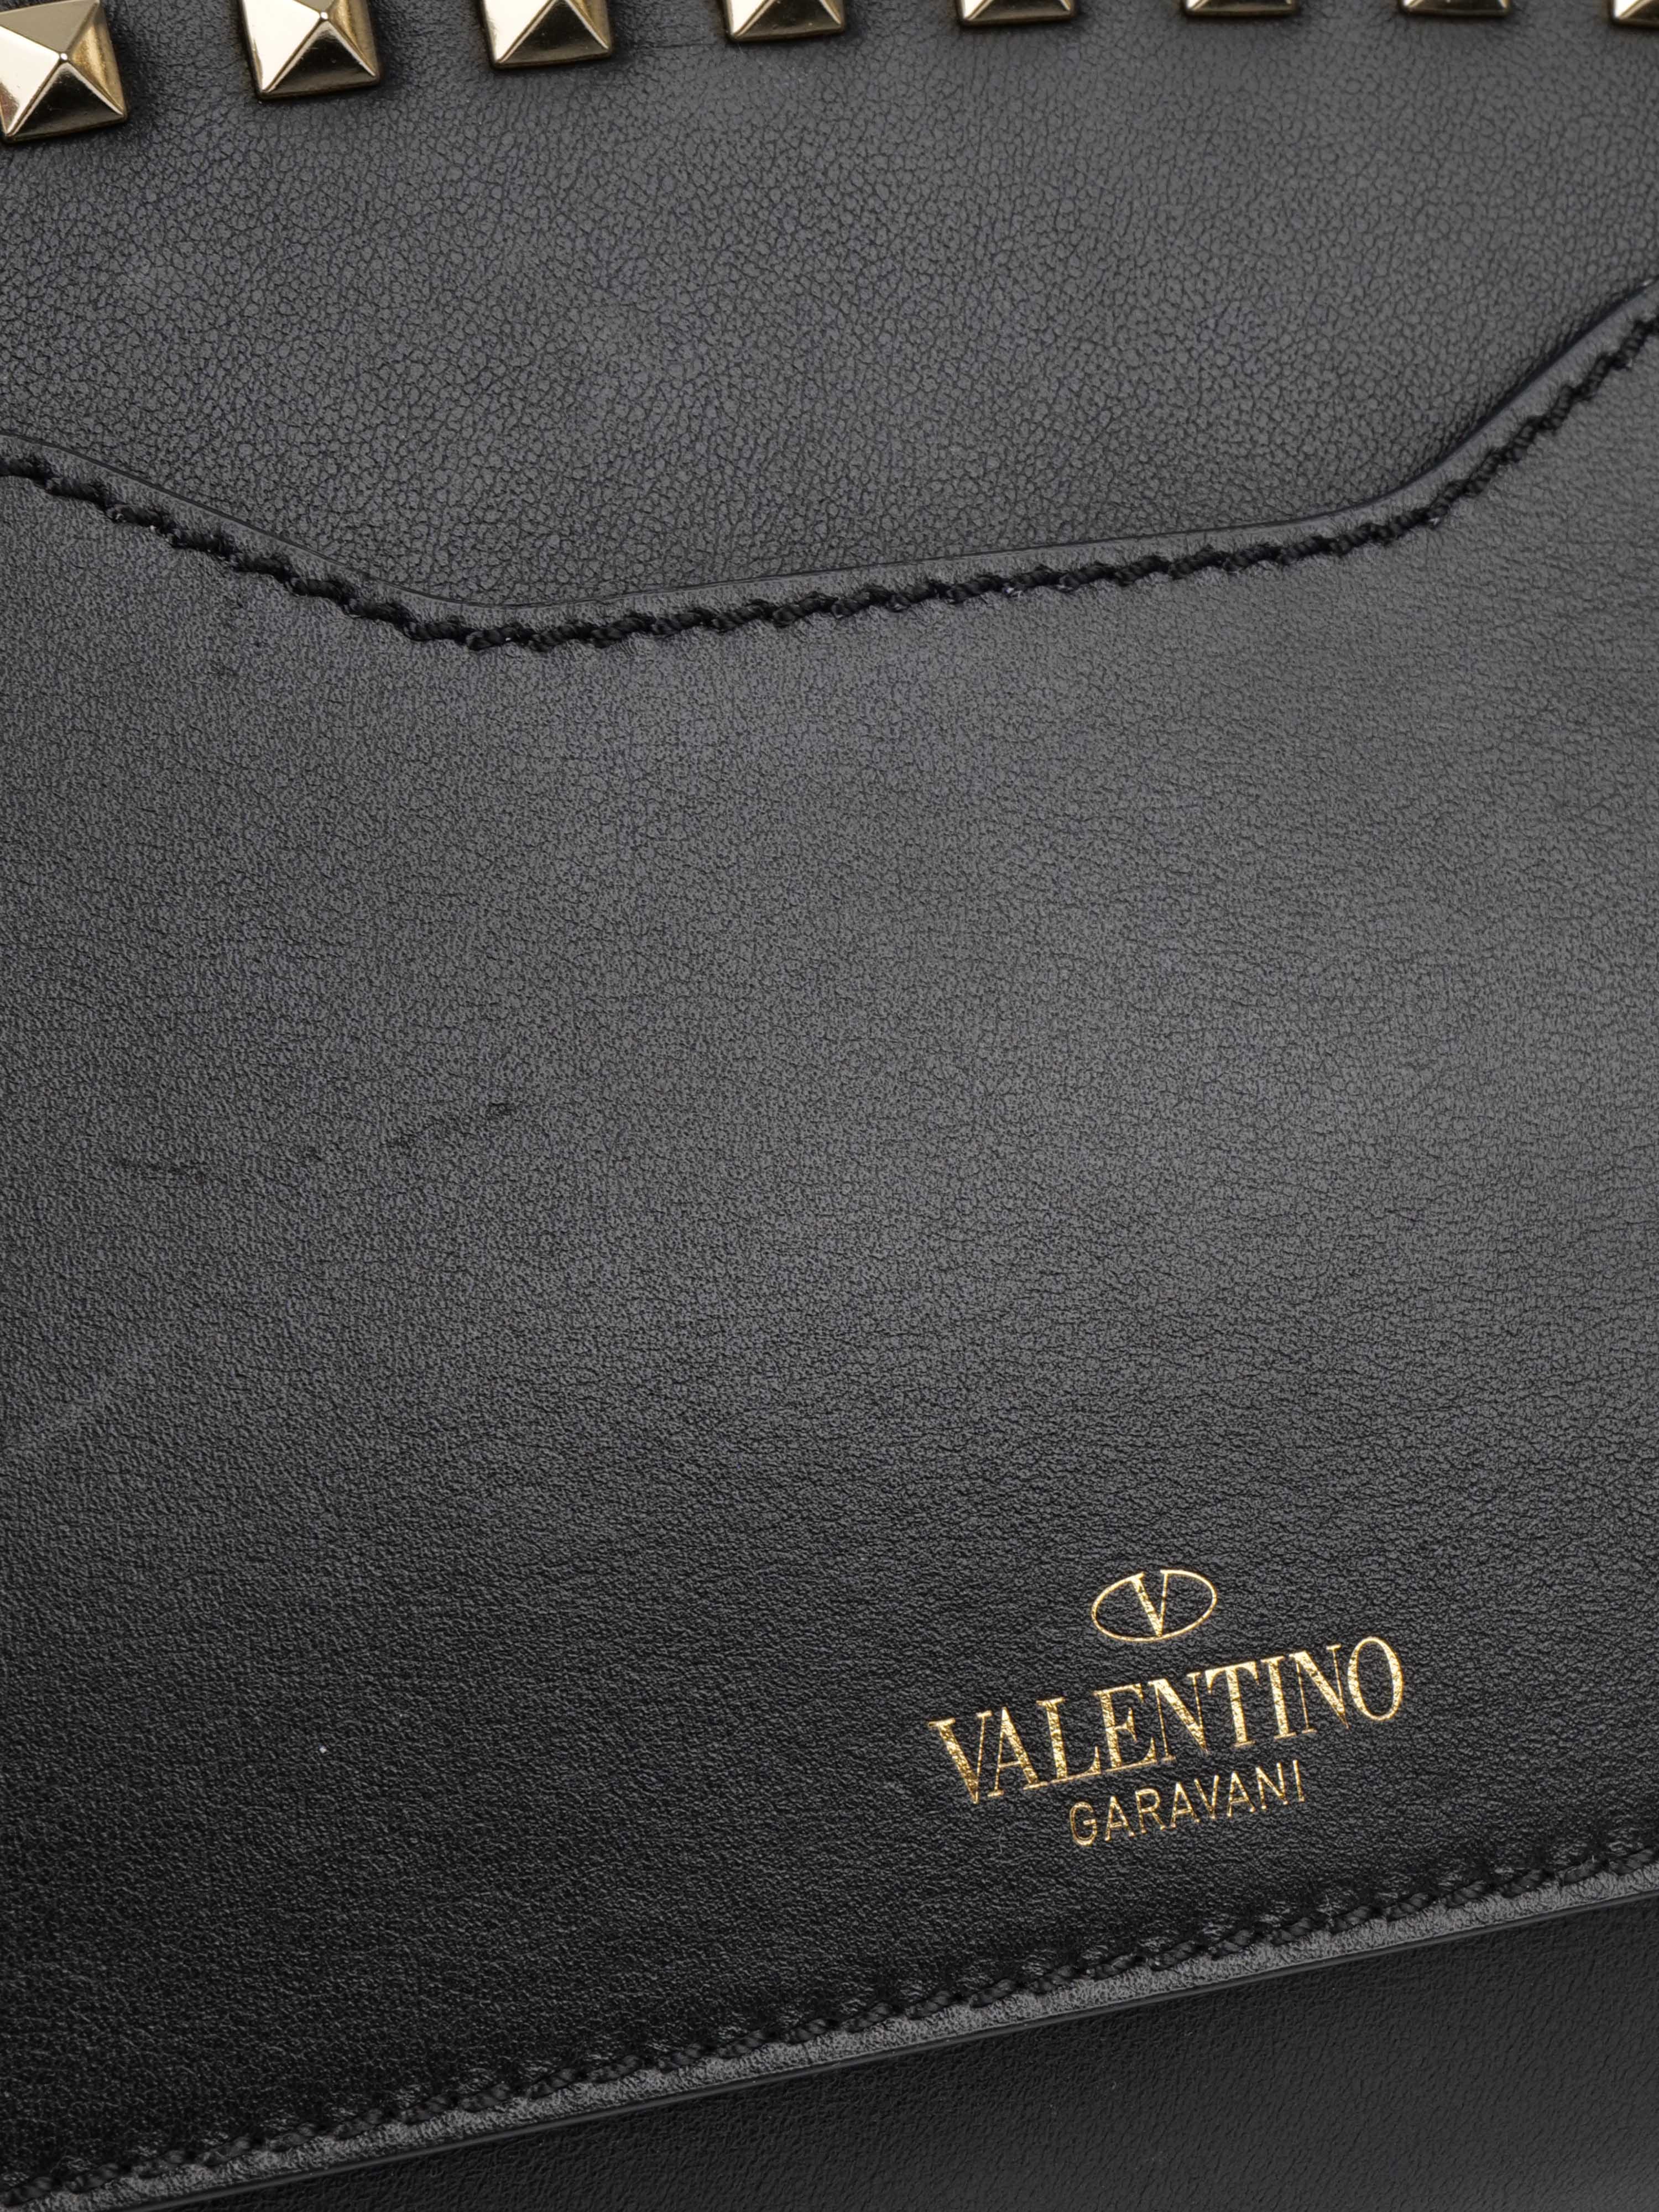 Valentino Black Rockstud Clutch.